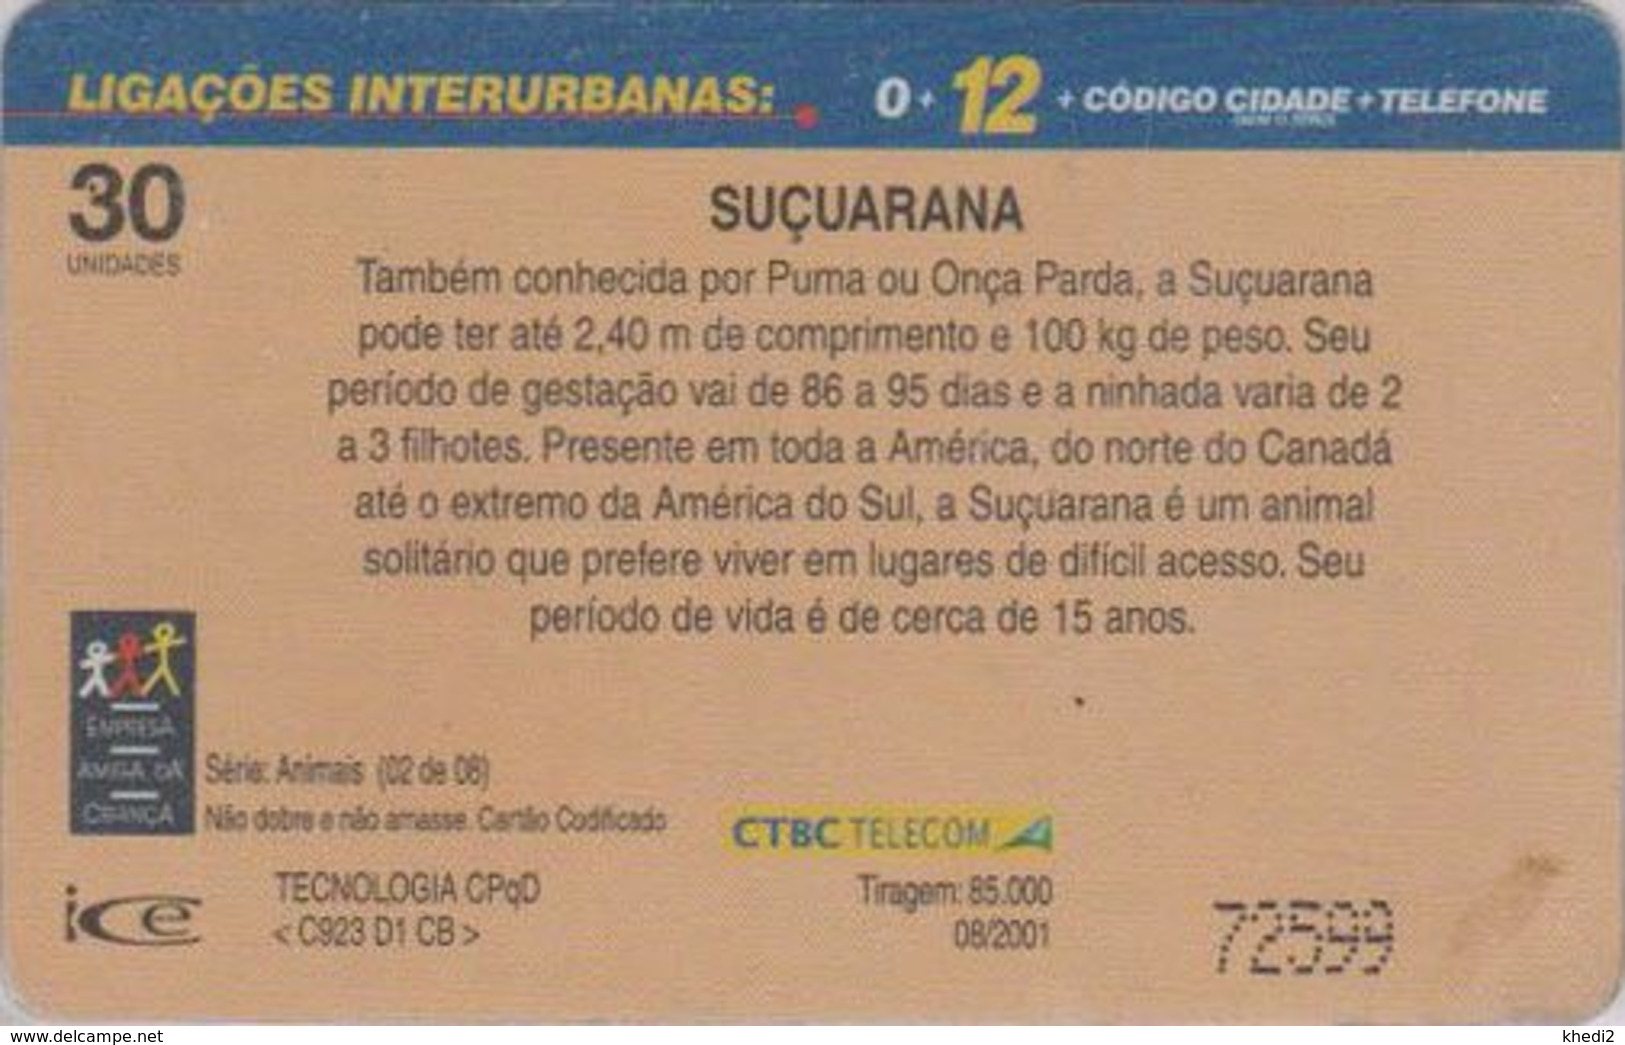 Télécarte BRESIL - CTBC - Série 02/10 - ANIMAL - Félin PUMA - Feline BRAZIL BRASIL Phonecard - 139 - Brazilië